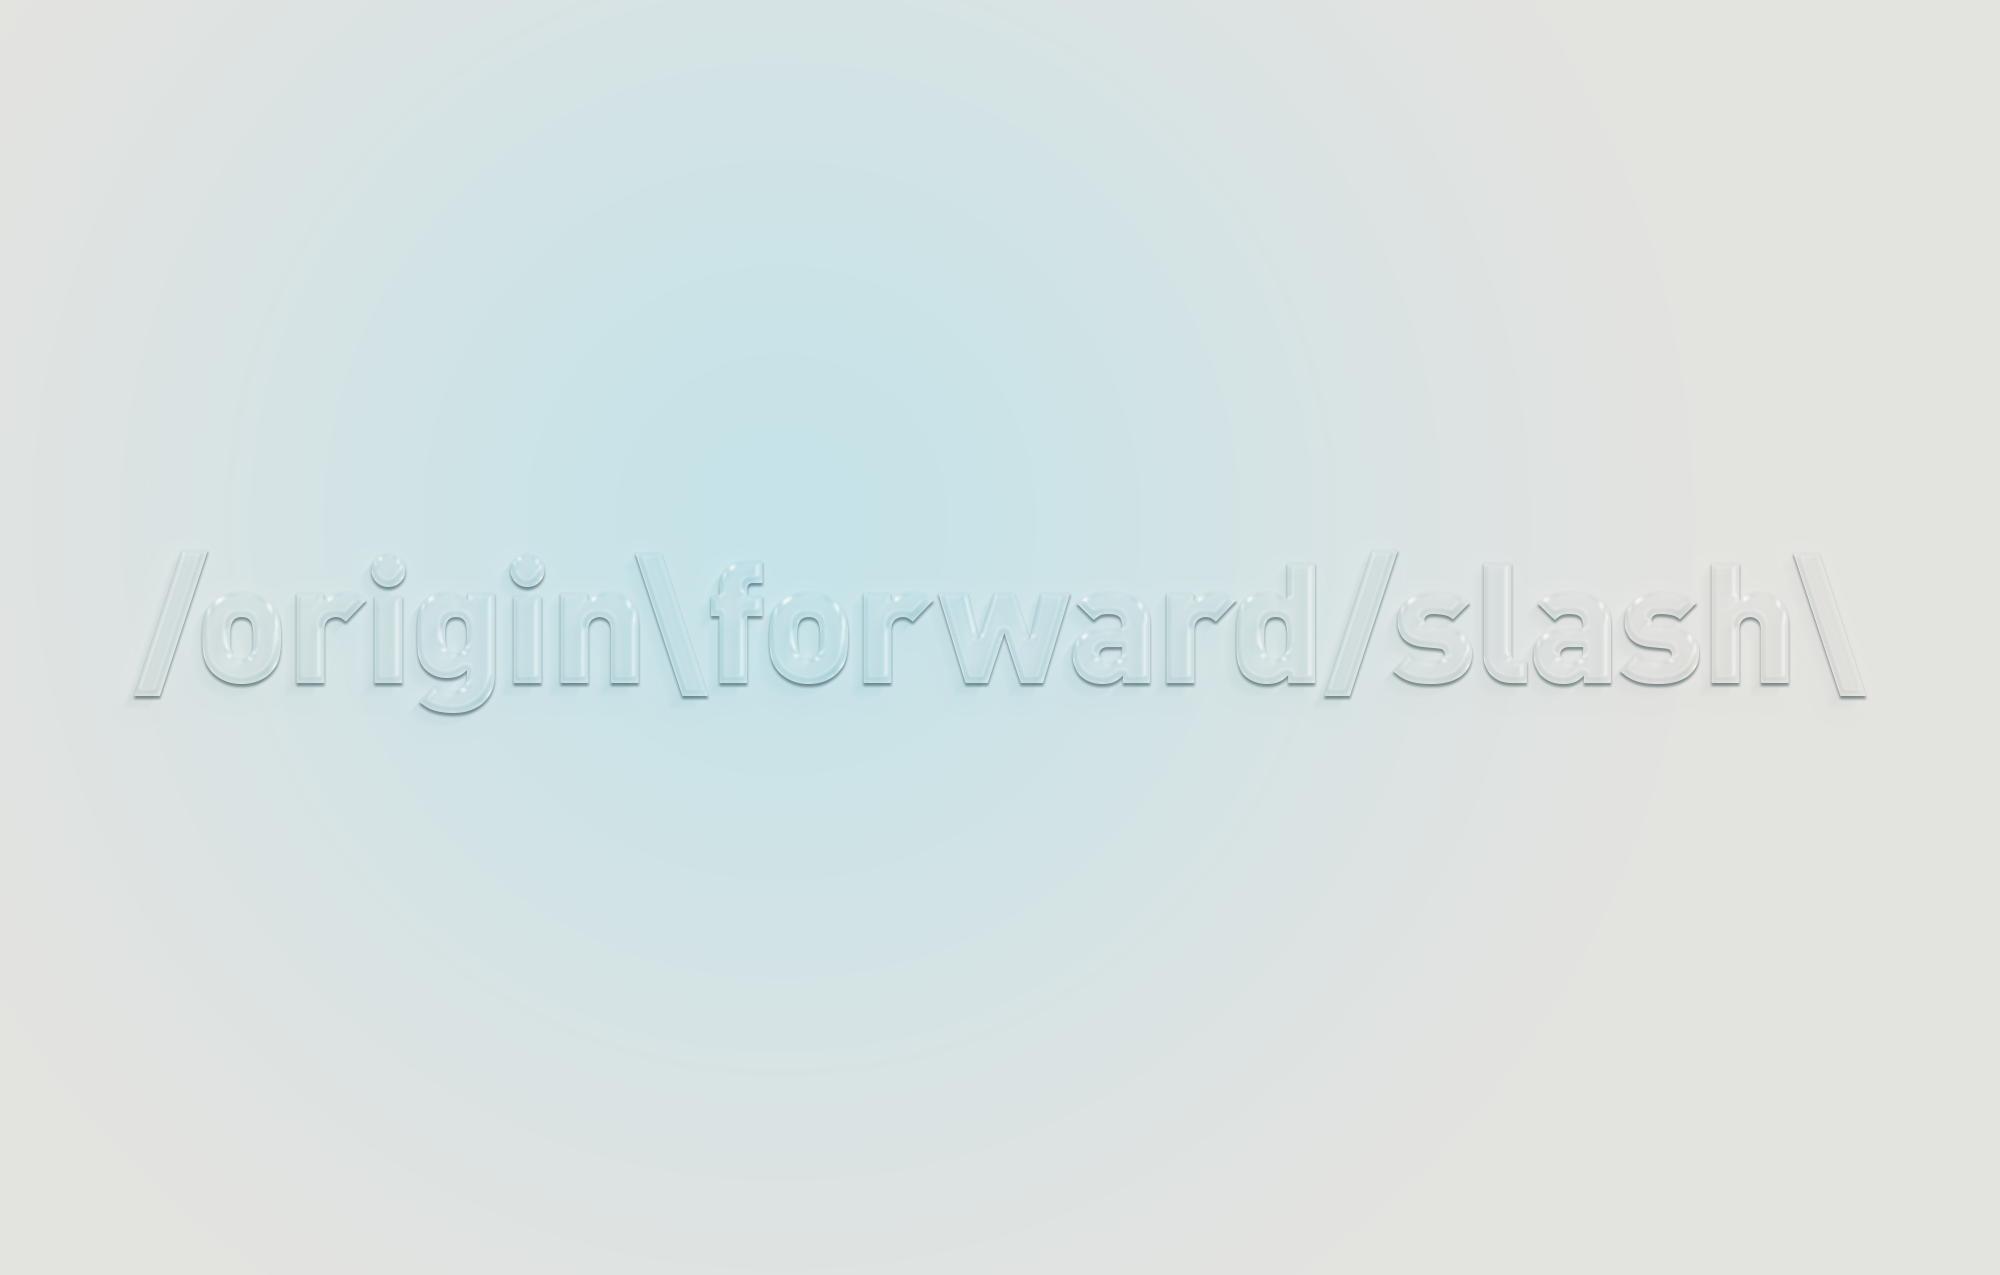  (/origin\forward/slash\ 0)